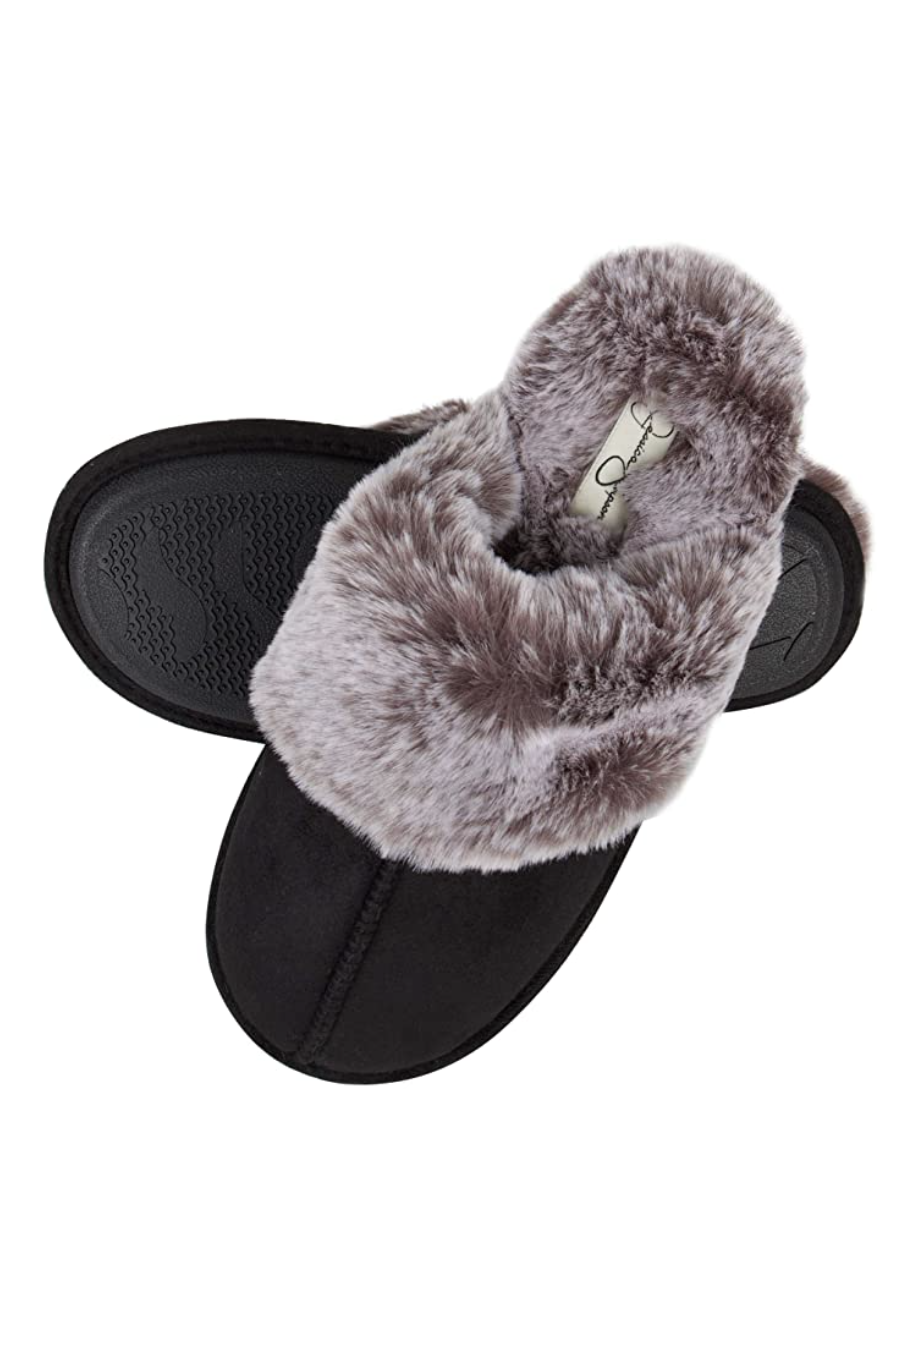 best women's slippers amazon